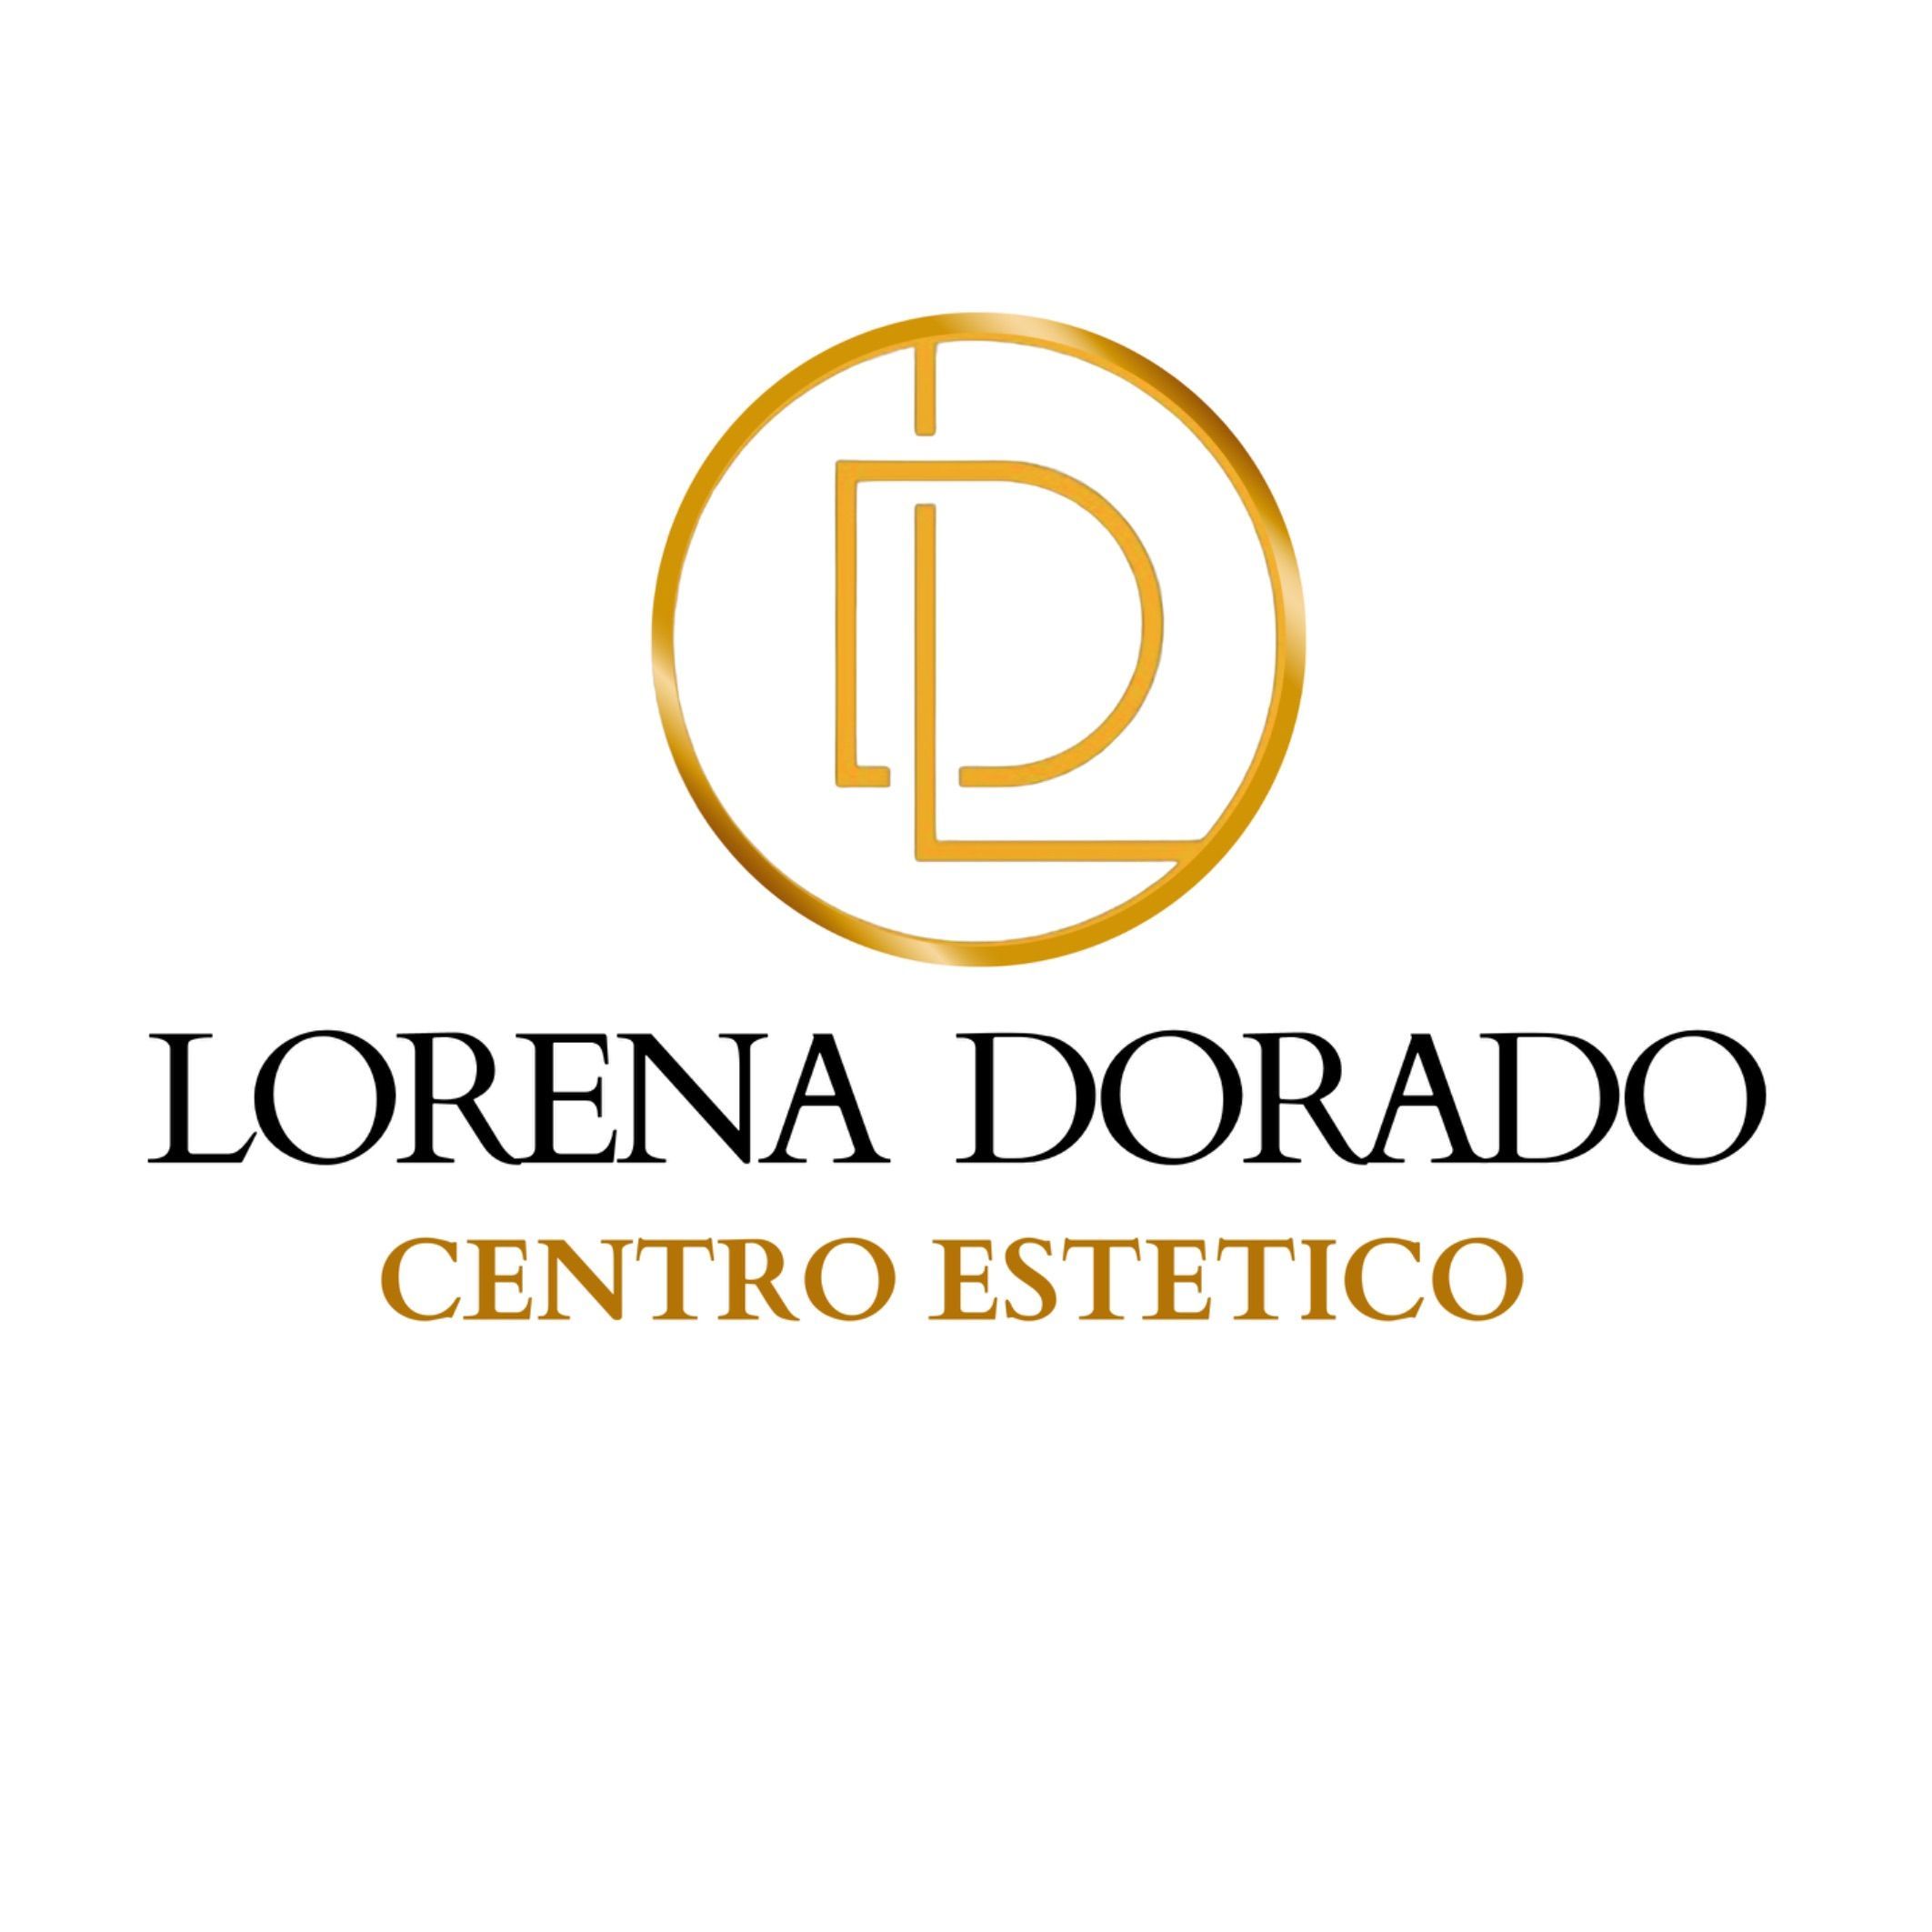 Lorena Dorado centro estetica, Carrer Bogatell, 21, 08930, Sant Adrià de Besòs